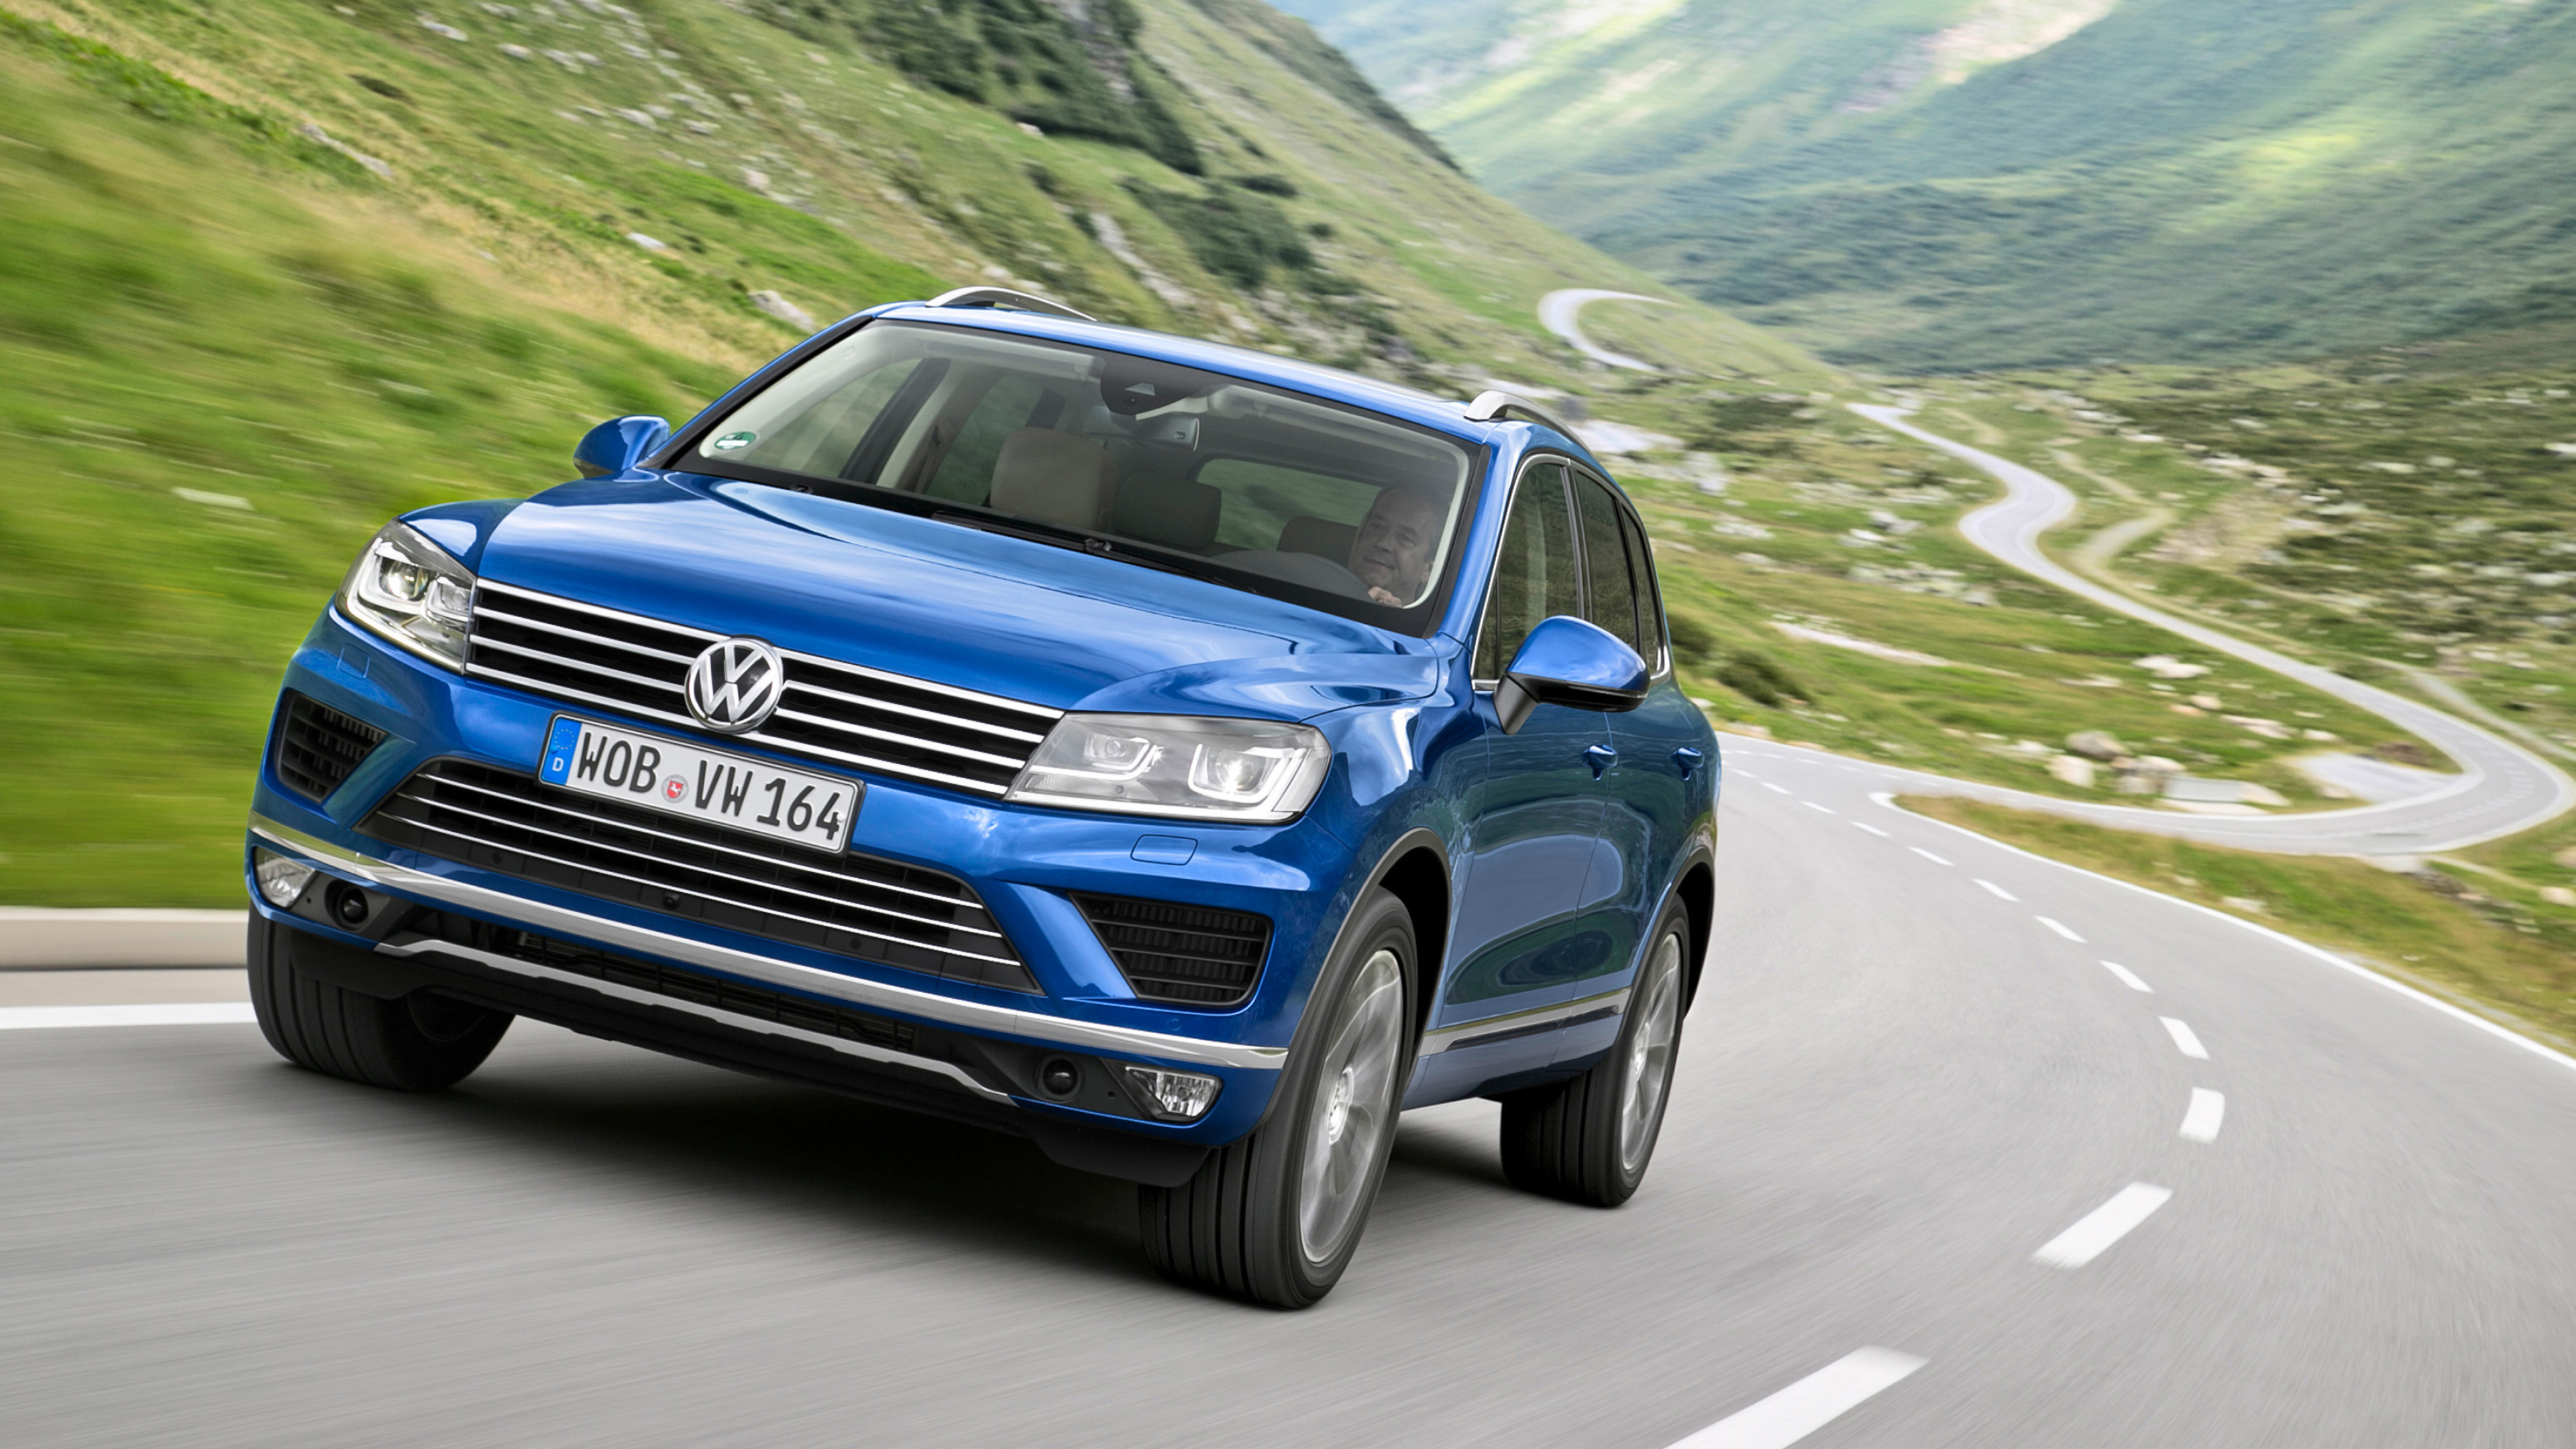 Volkswagen Touareg, Cars in motion, Ultimate off-roader, High-definition wallpapers, 3840x2160 4K Desktop